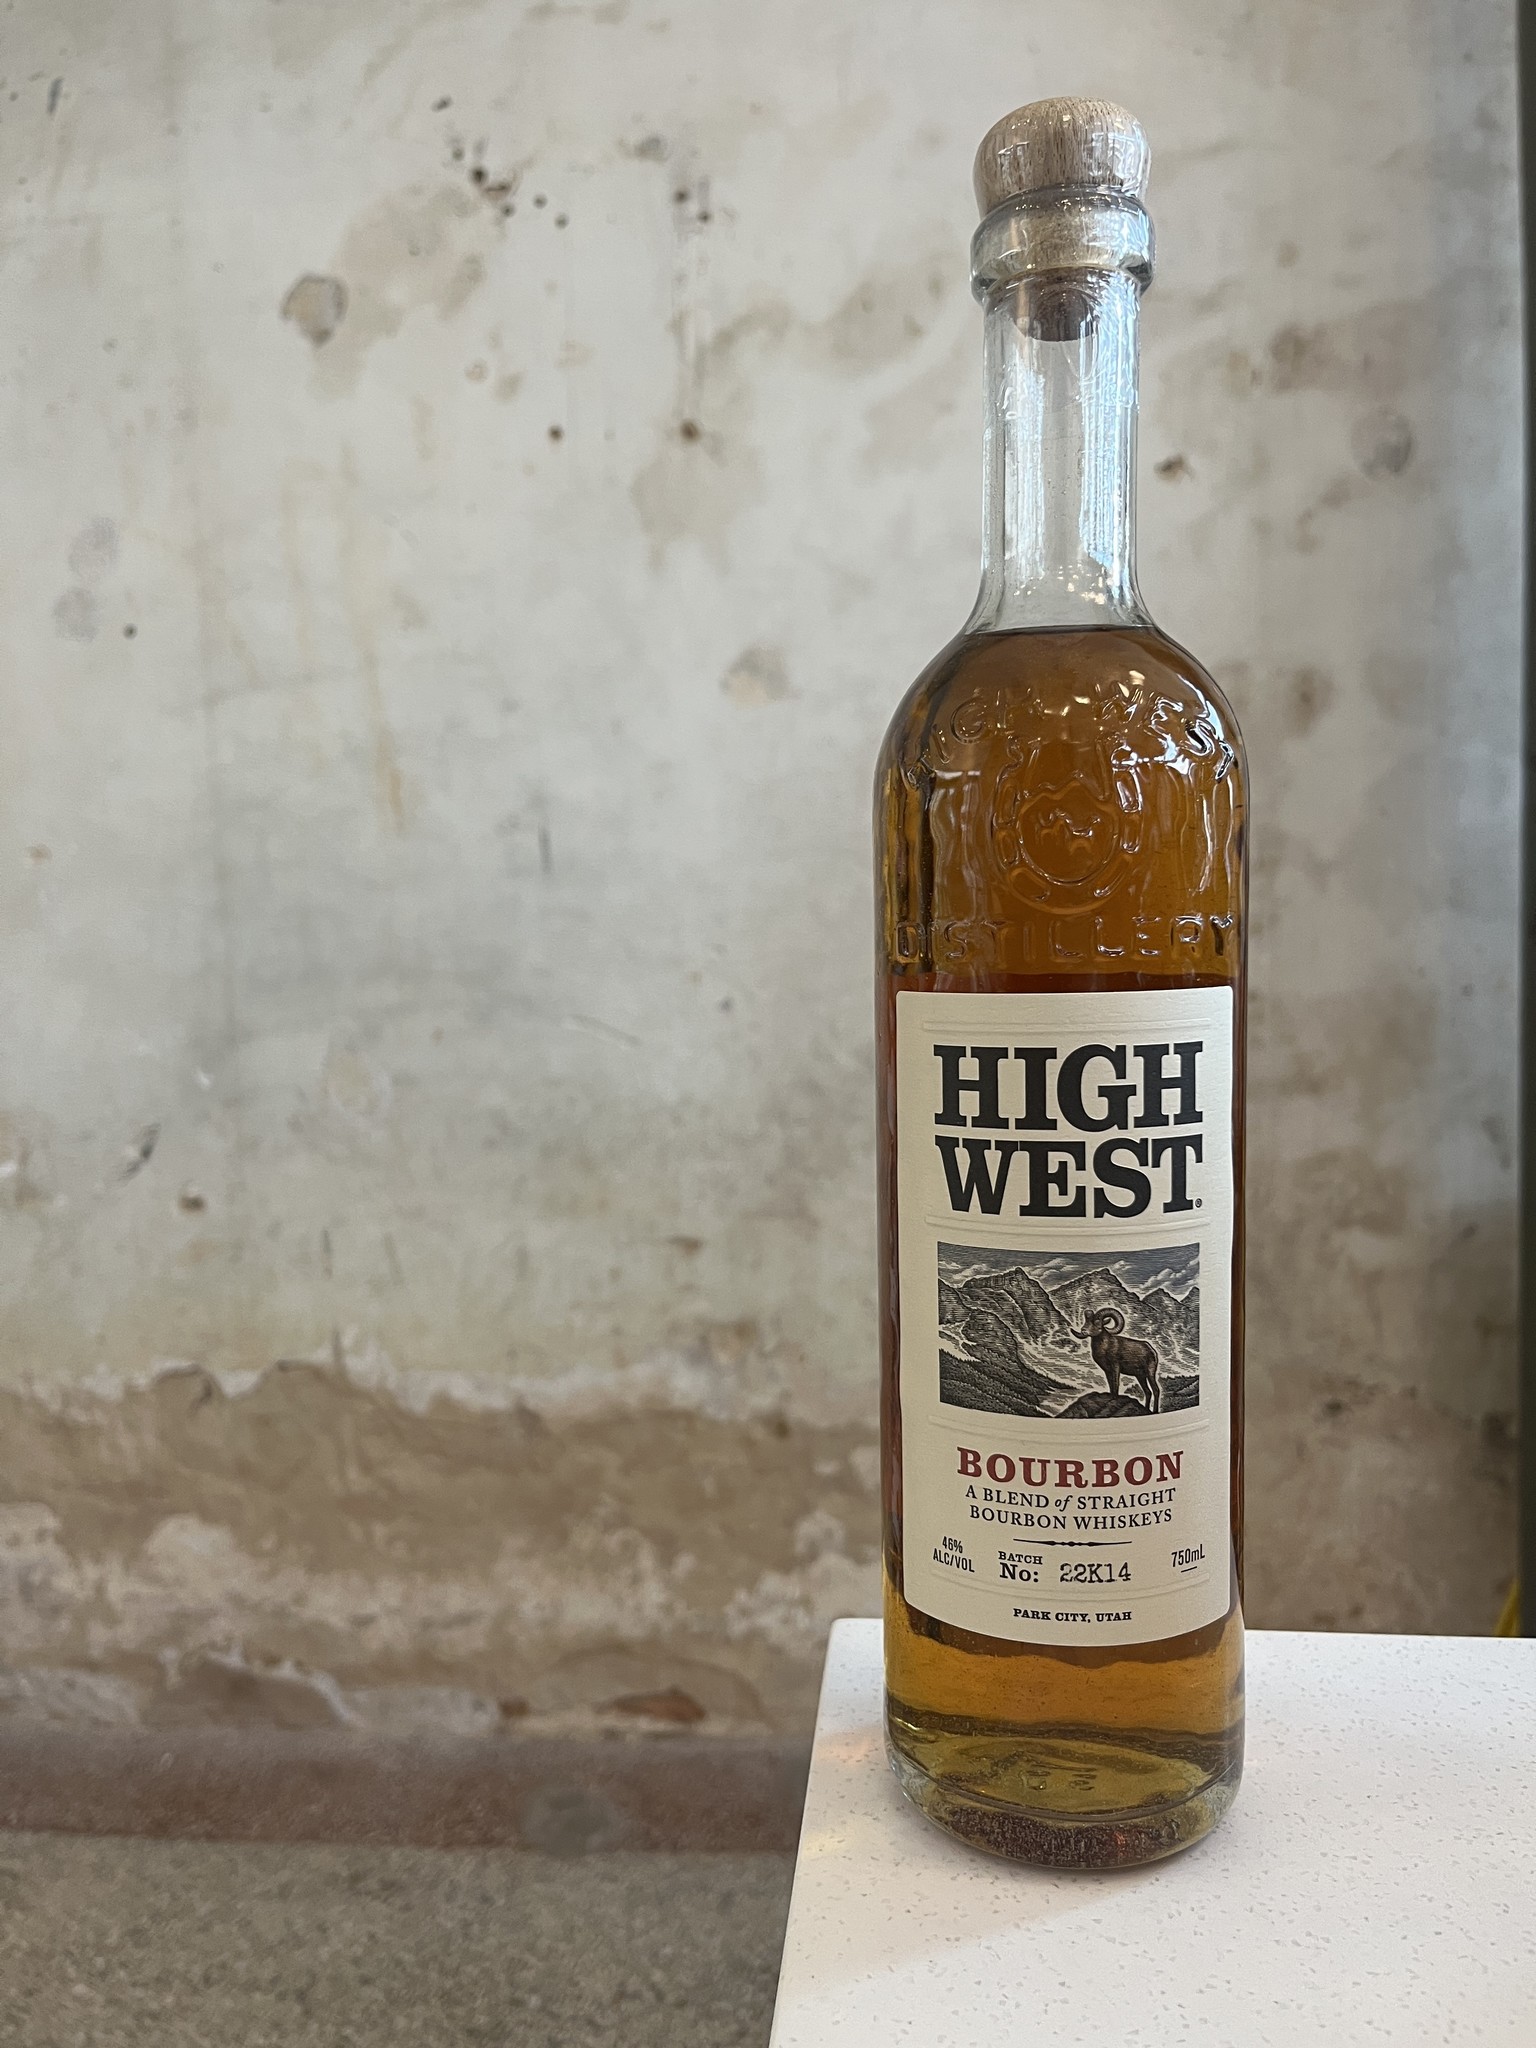 High West High West American Prairie Bourbon